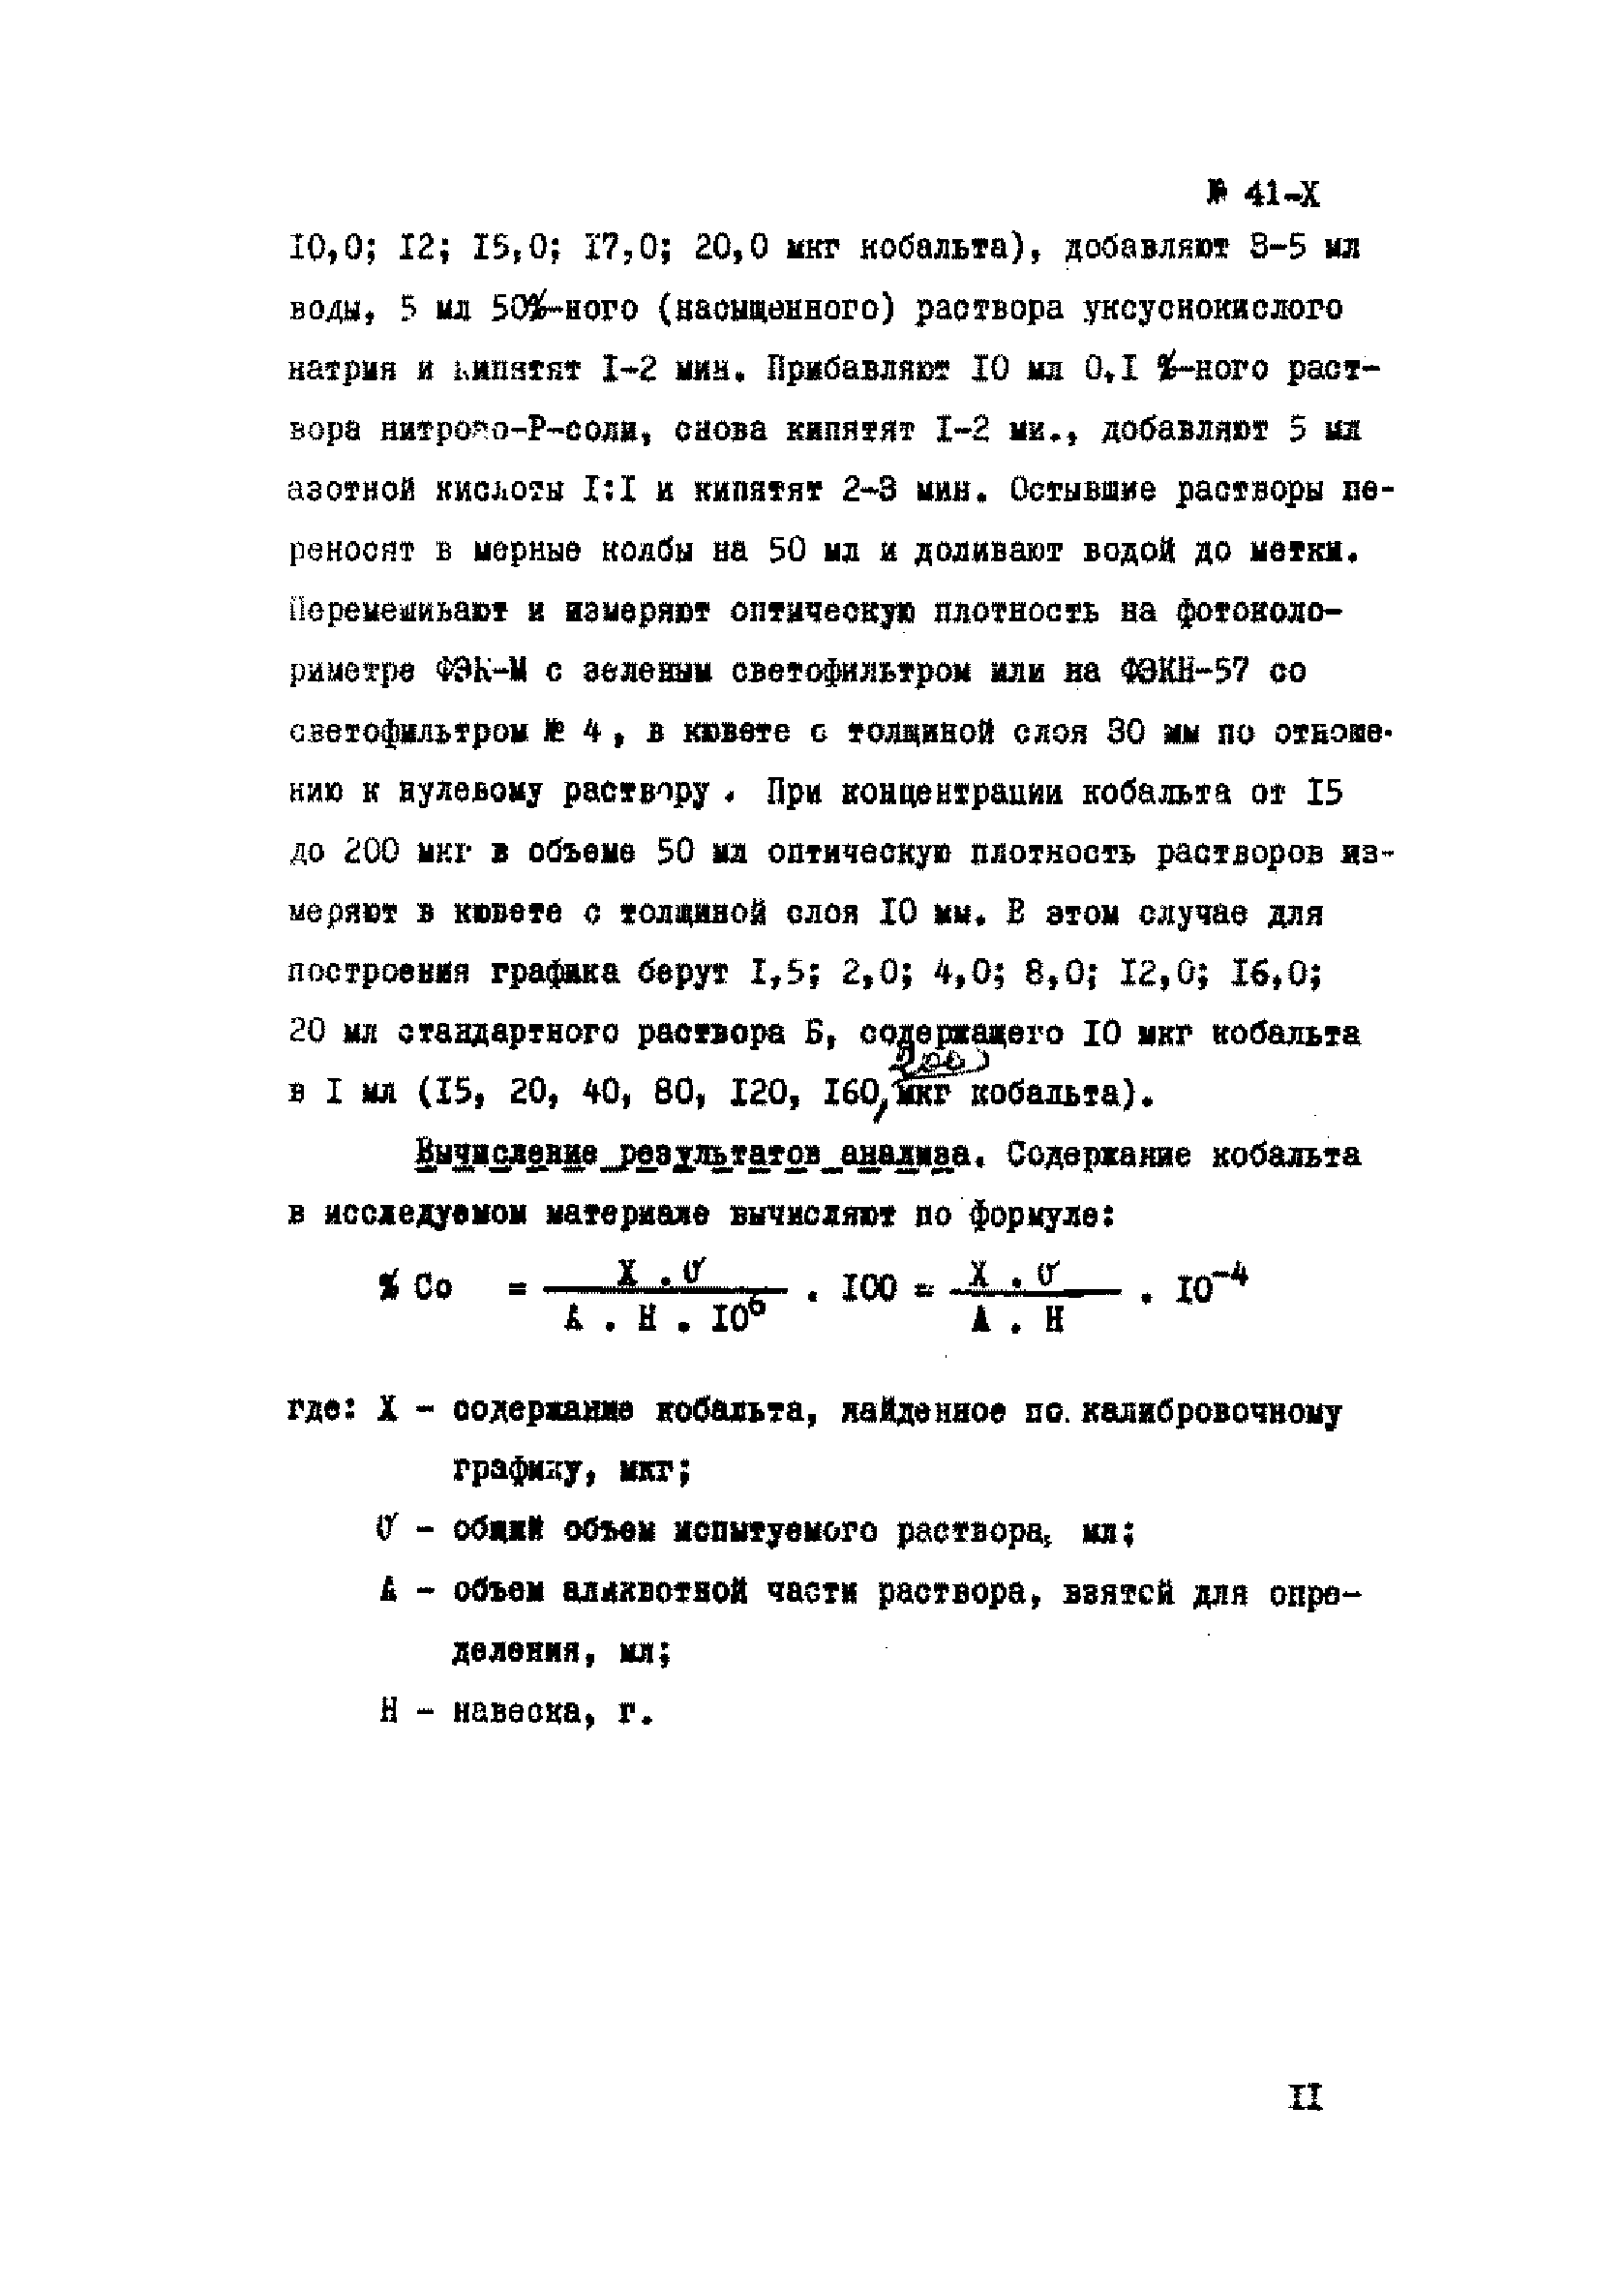 Инструкция НСАМ 41-Х